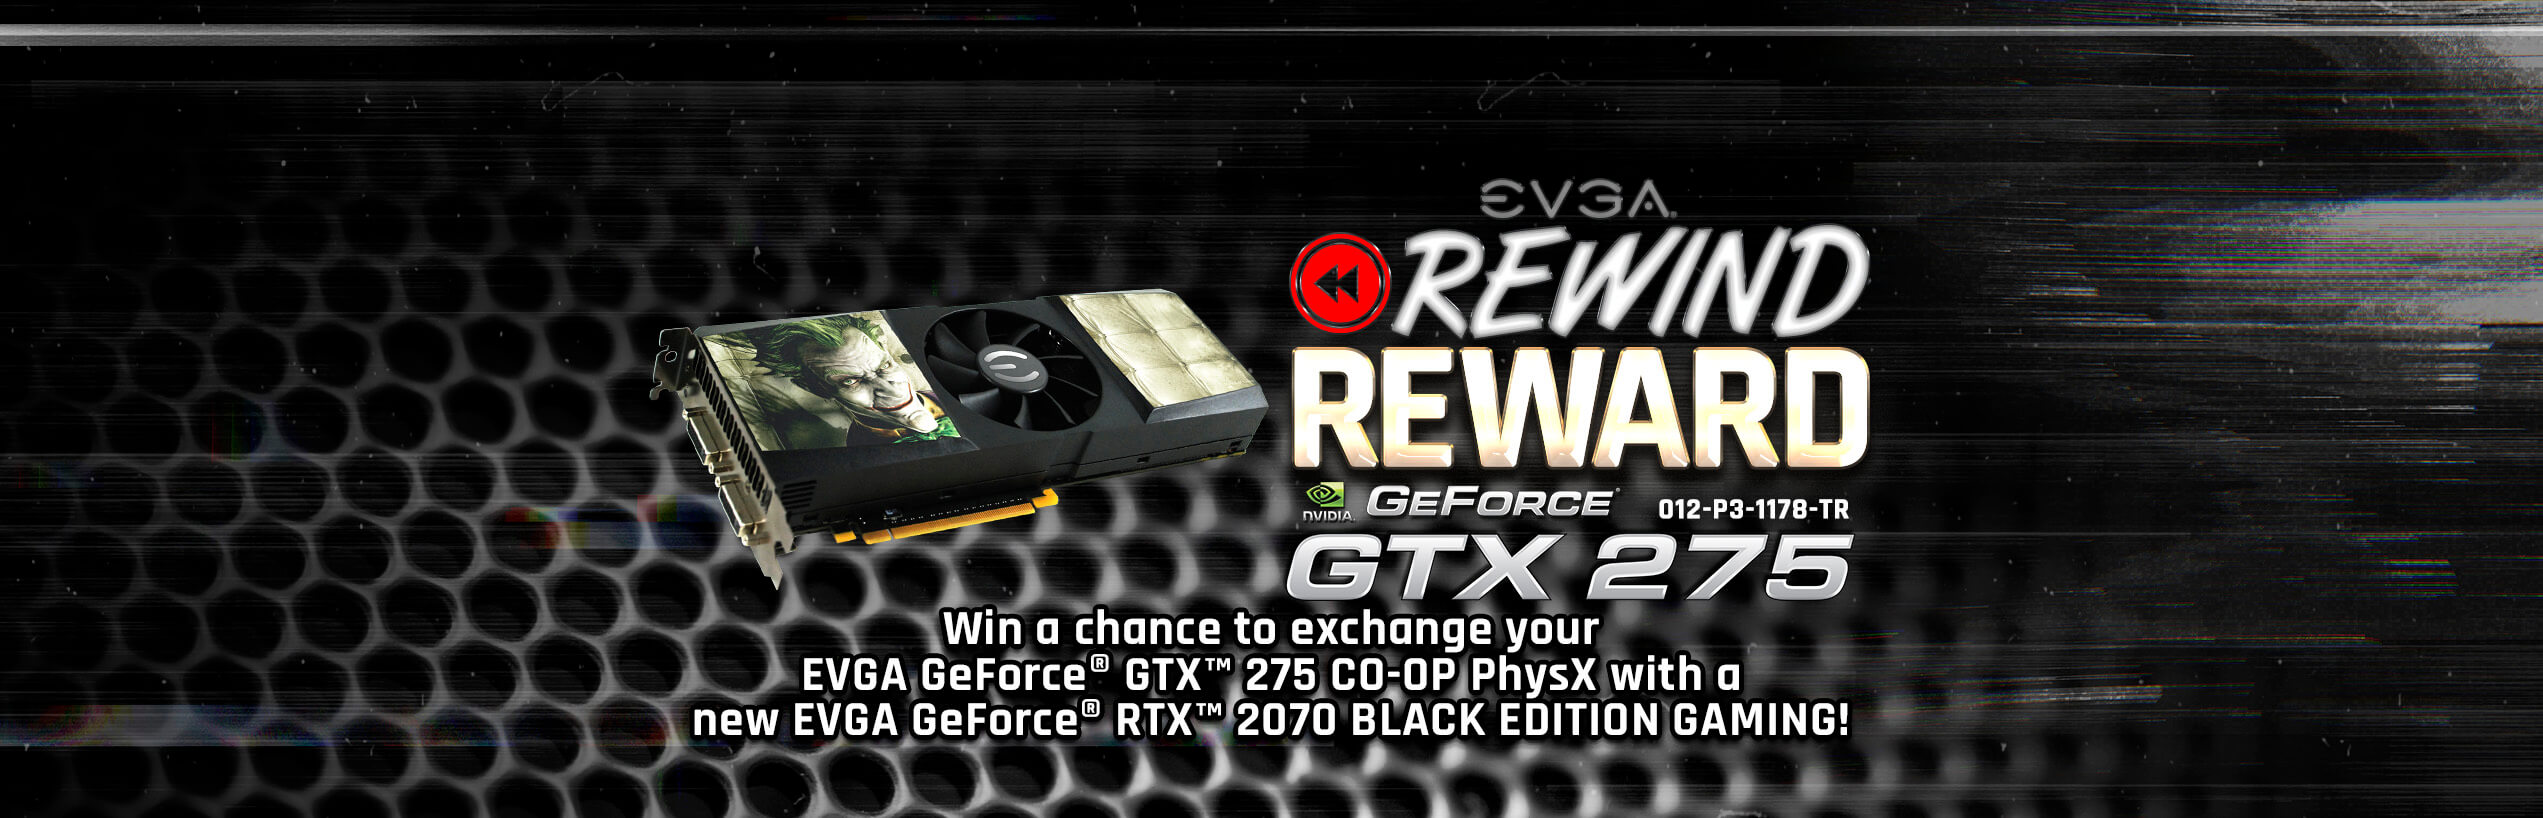 EVGA GeForce GTX 275 CO-OP PhysX Edition to EVGA GeForce RTX 2070 XC BLACK EDITION